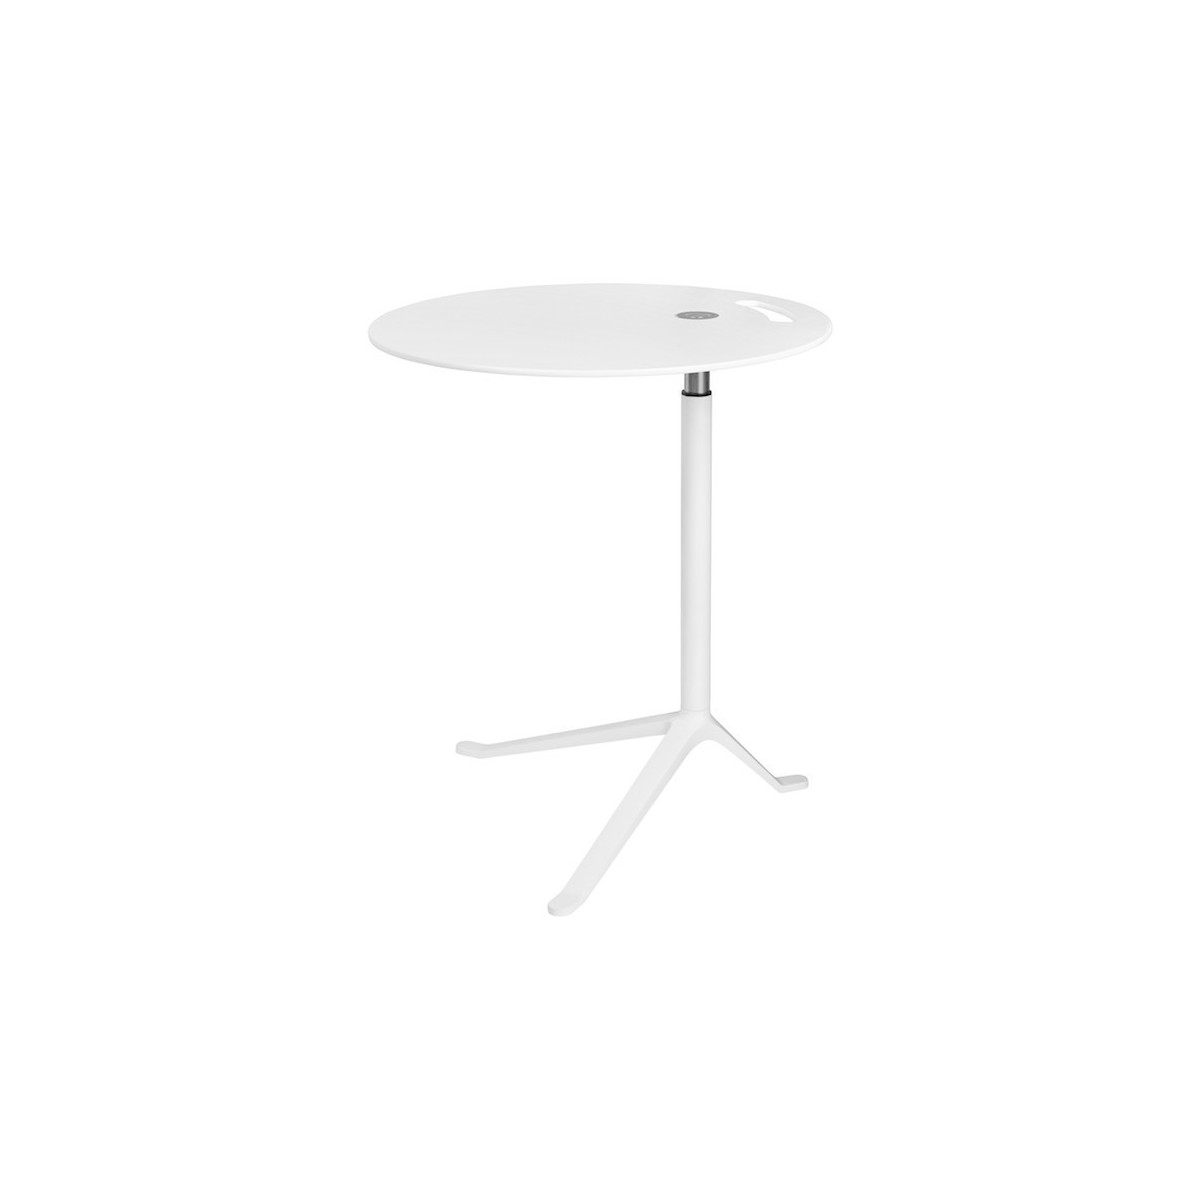 KS12 Little Friend table (Fixed height) – White / White